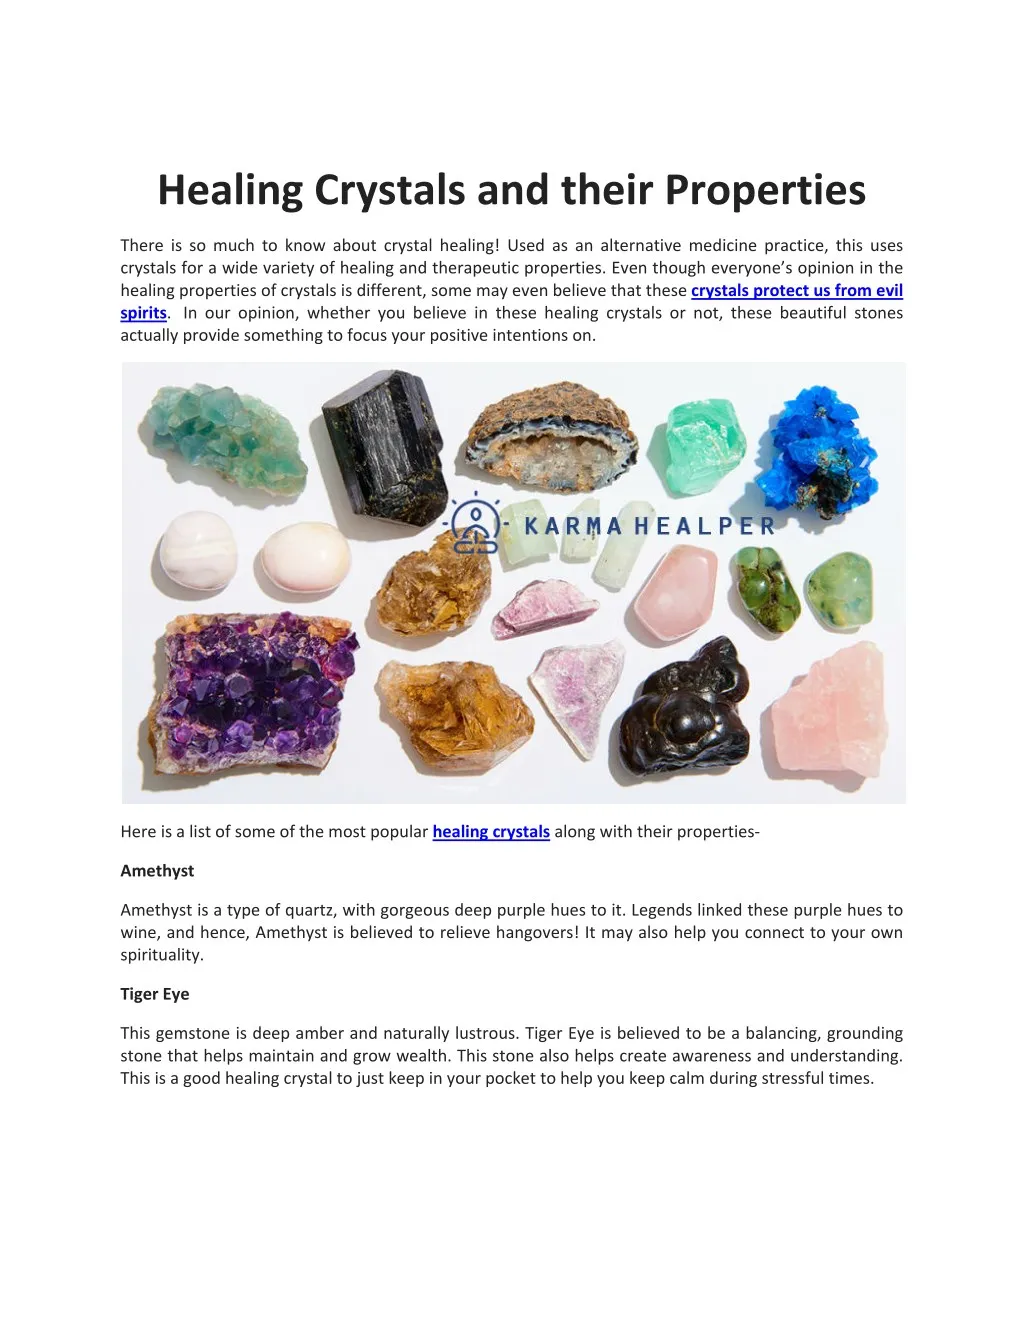 PPT - Healing Crystals and their Properties - KARMA HEALPER PowerPoint